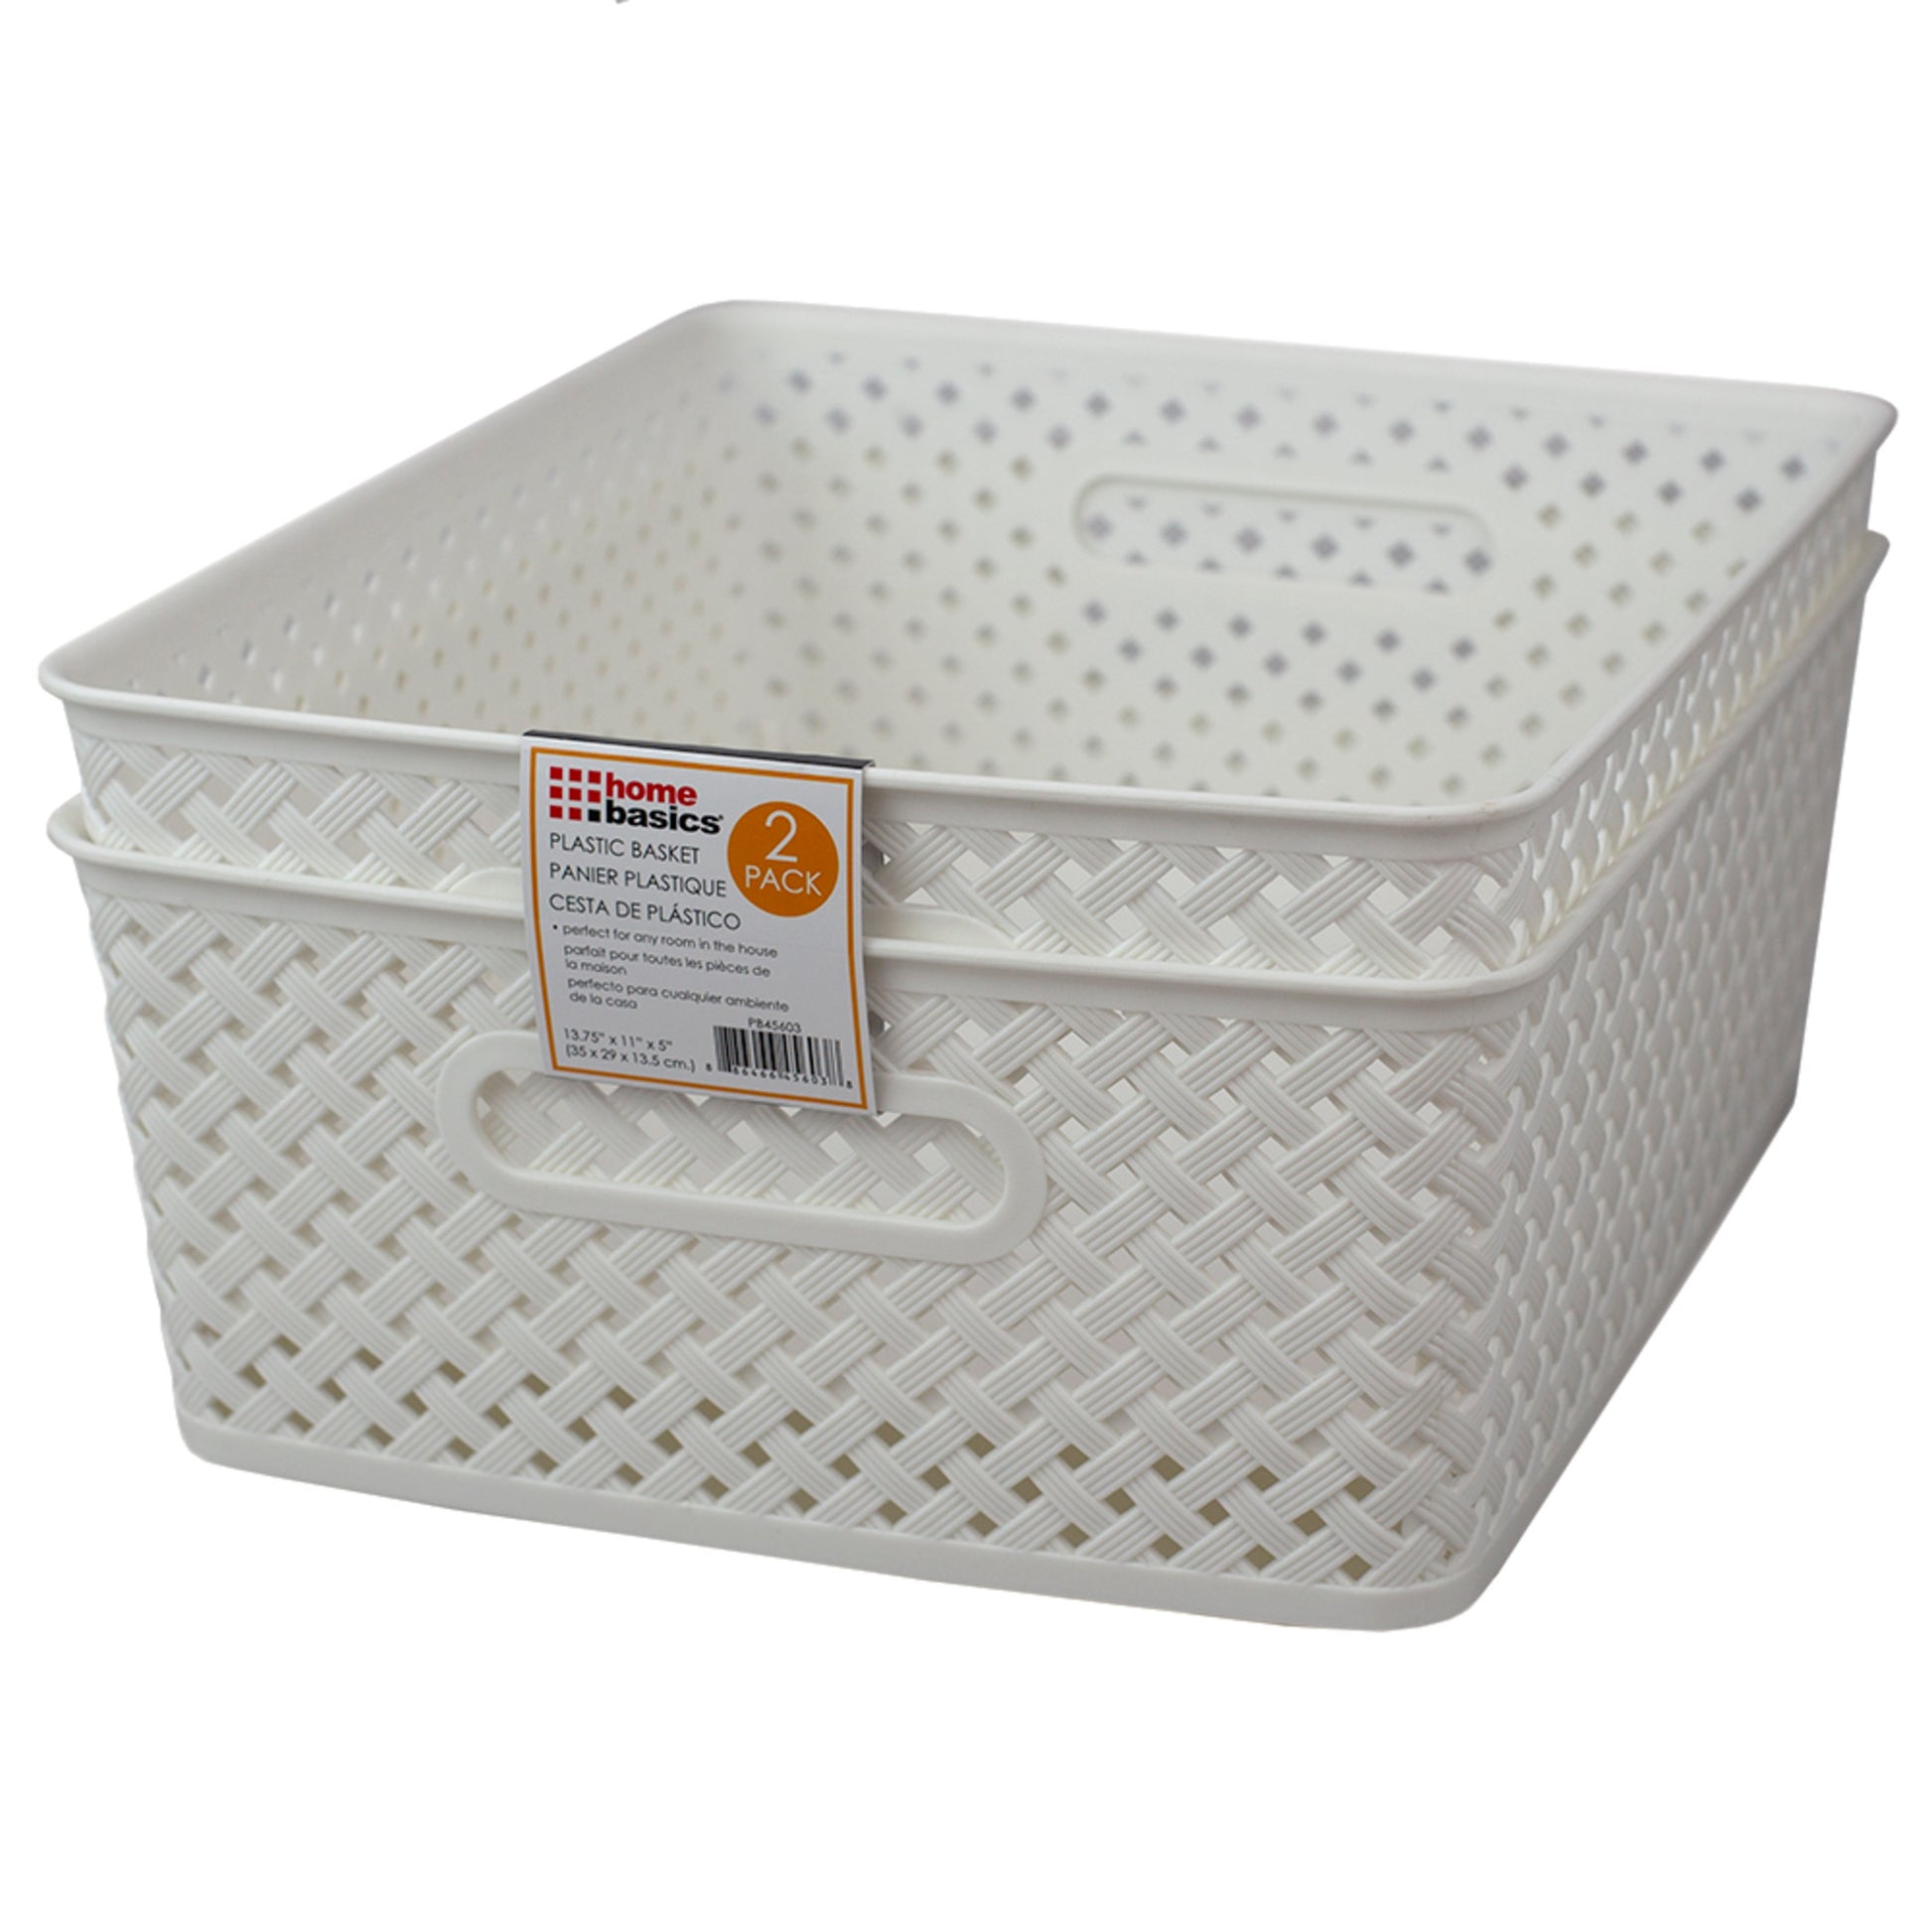 Home Basics Triple Woven 14"" x 11.5"" x 5.25"" Multi-Purpose Stackable Plastic Storage Basket, (Pack of 2), White - White